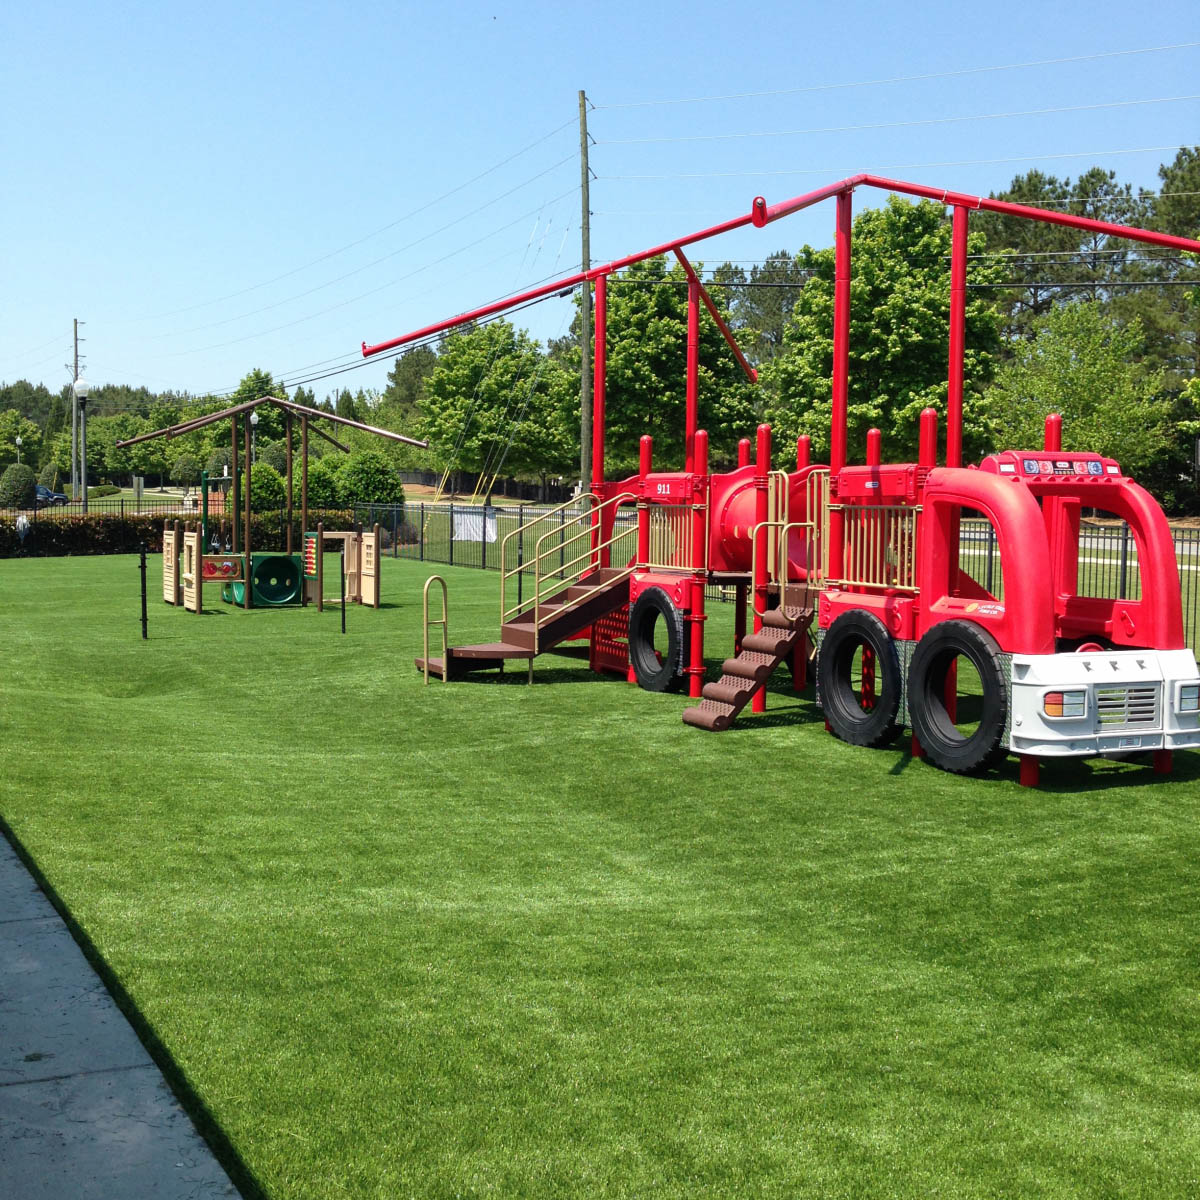 Artificial grass playground with firetruck jungle gym